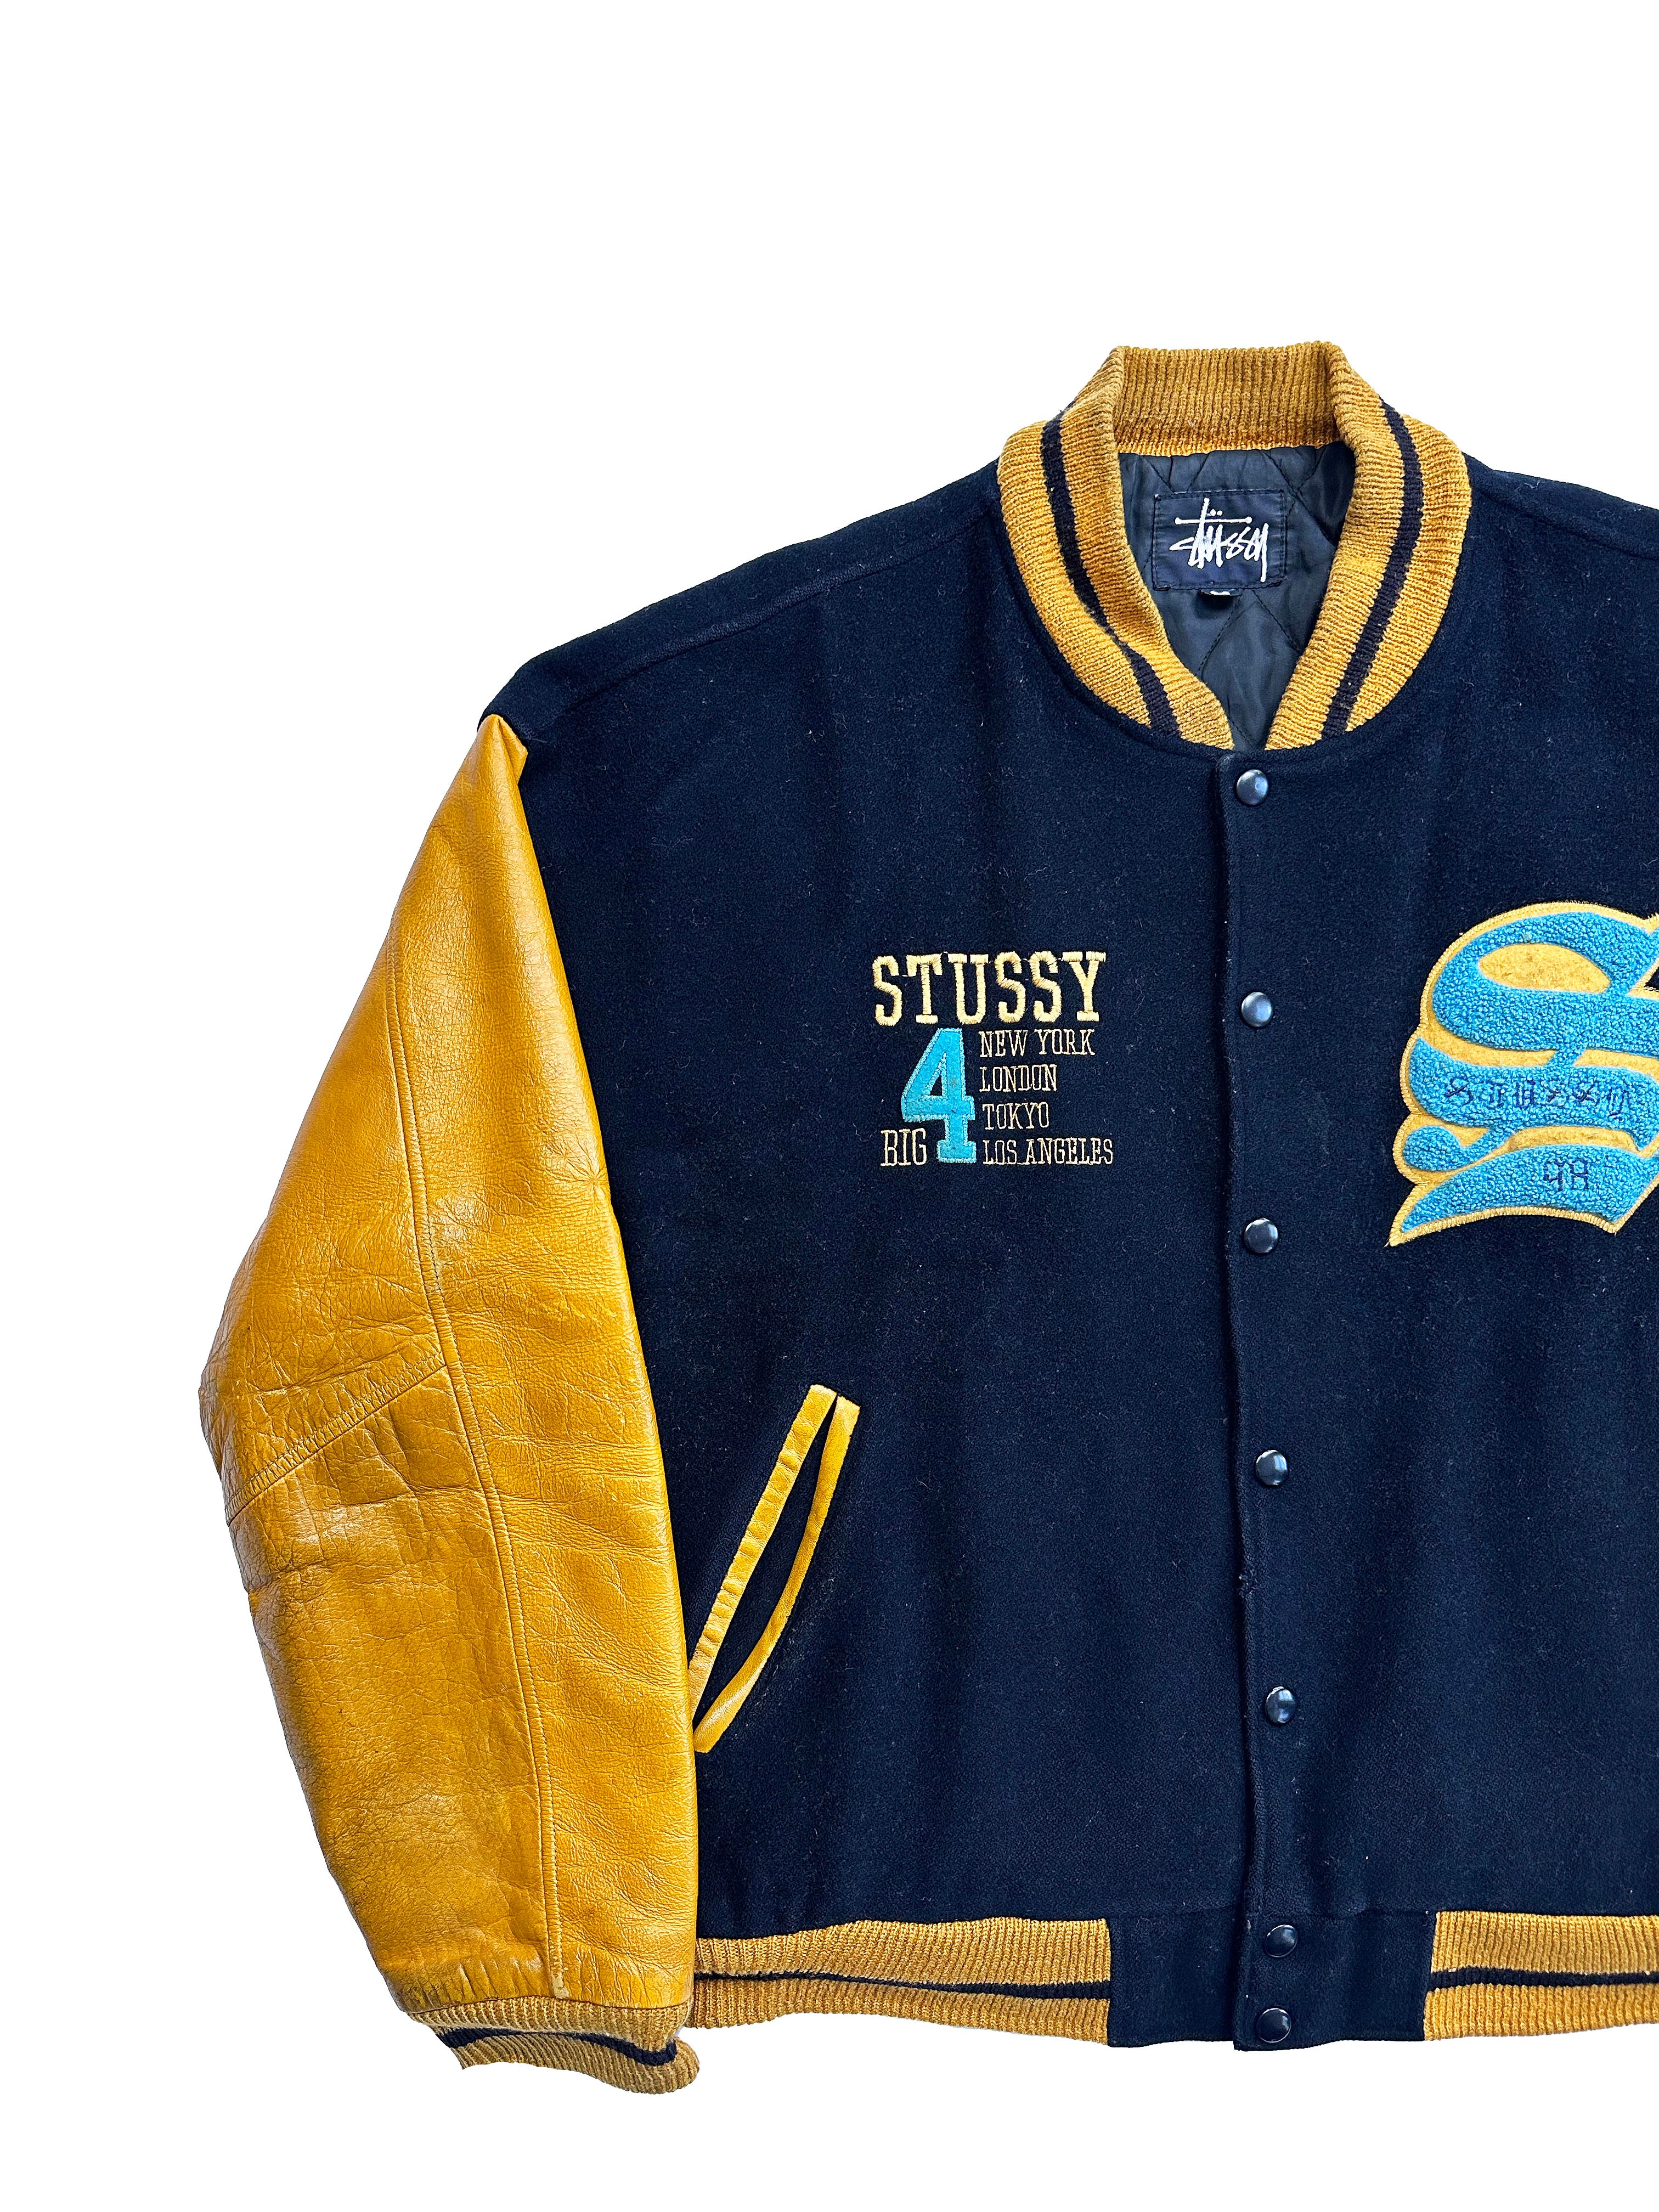 Stussy Big 4 Leather/Wool Varsity Jacket 1998